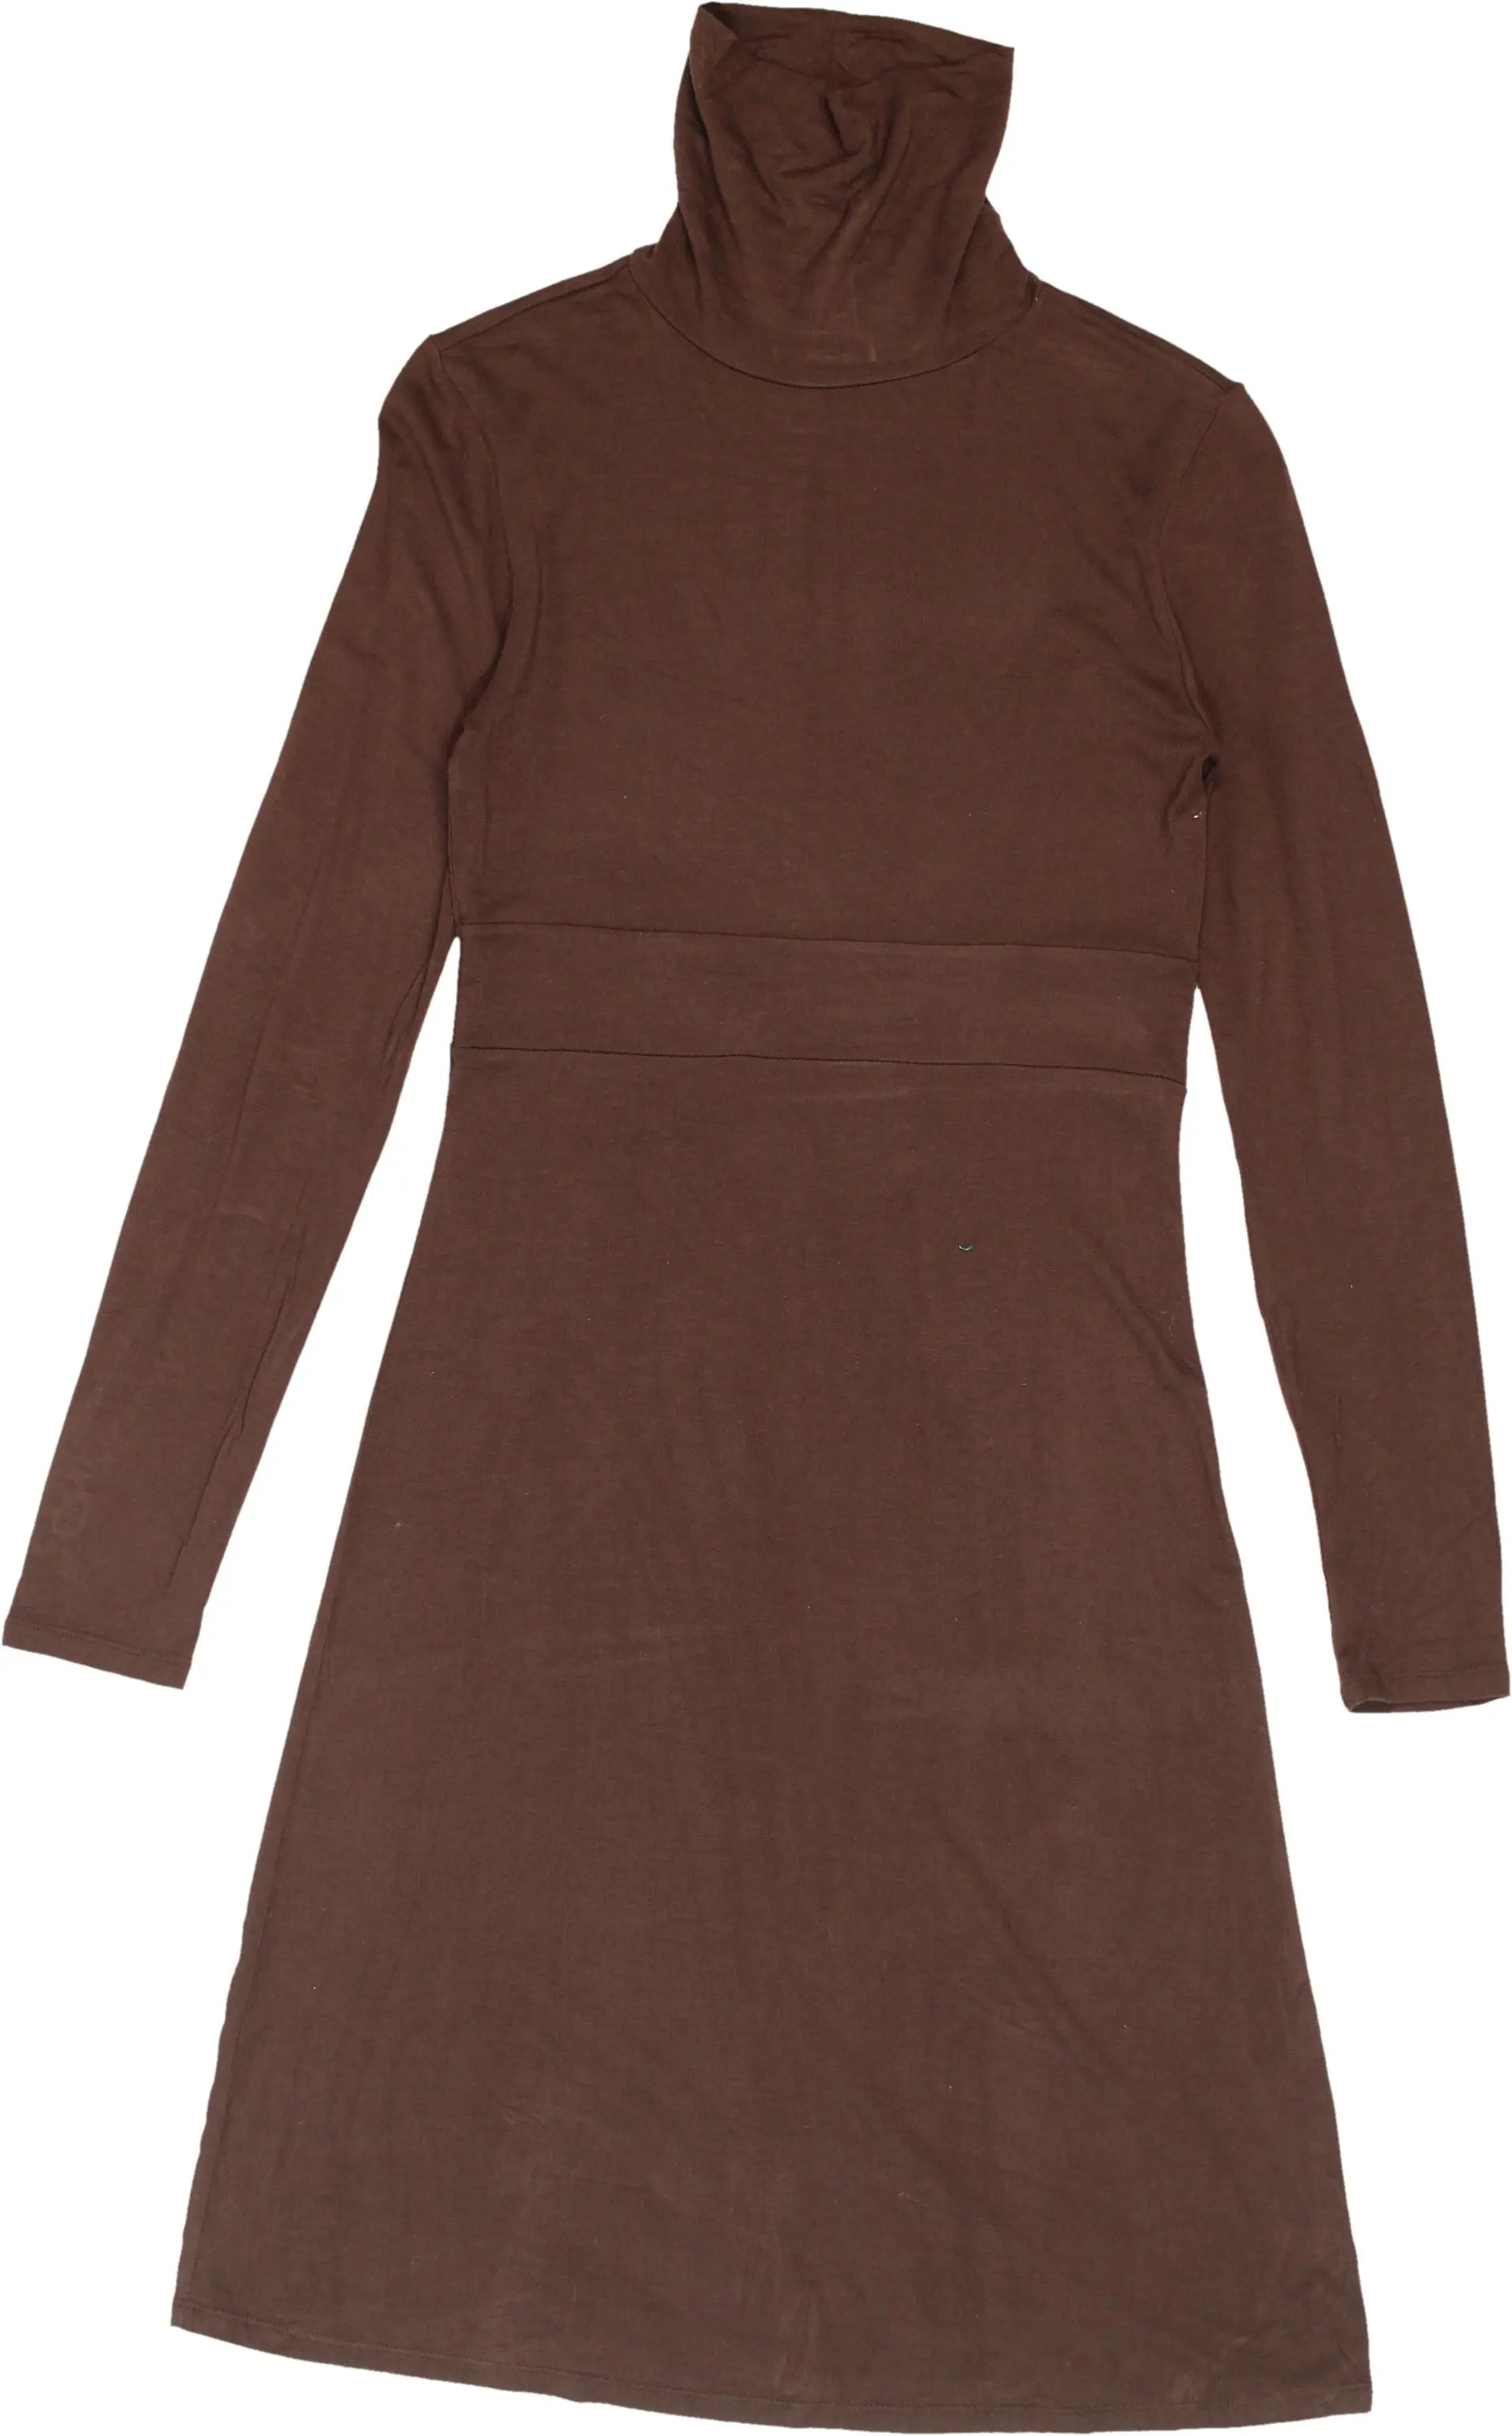 HEMA - Long Sleeve Turtleneck Dress- ThriftTale.com - Vintage and second handclothing